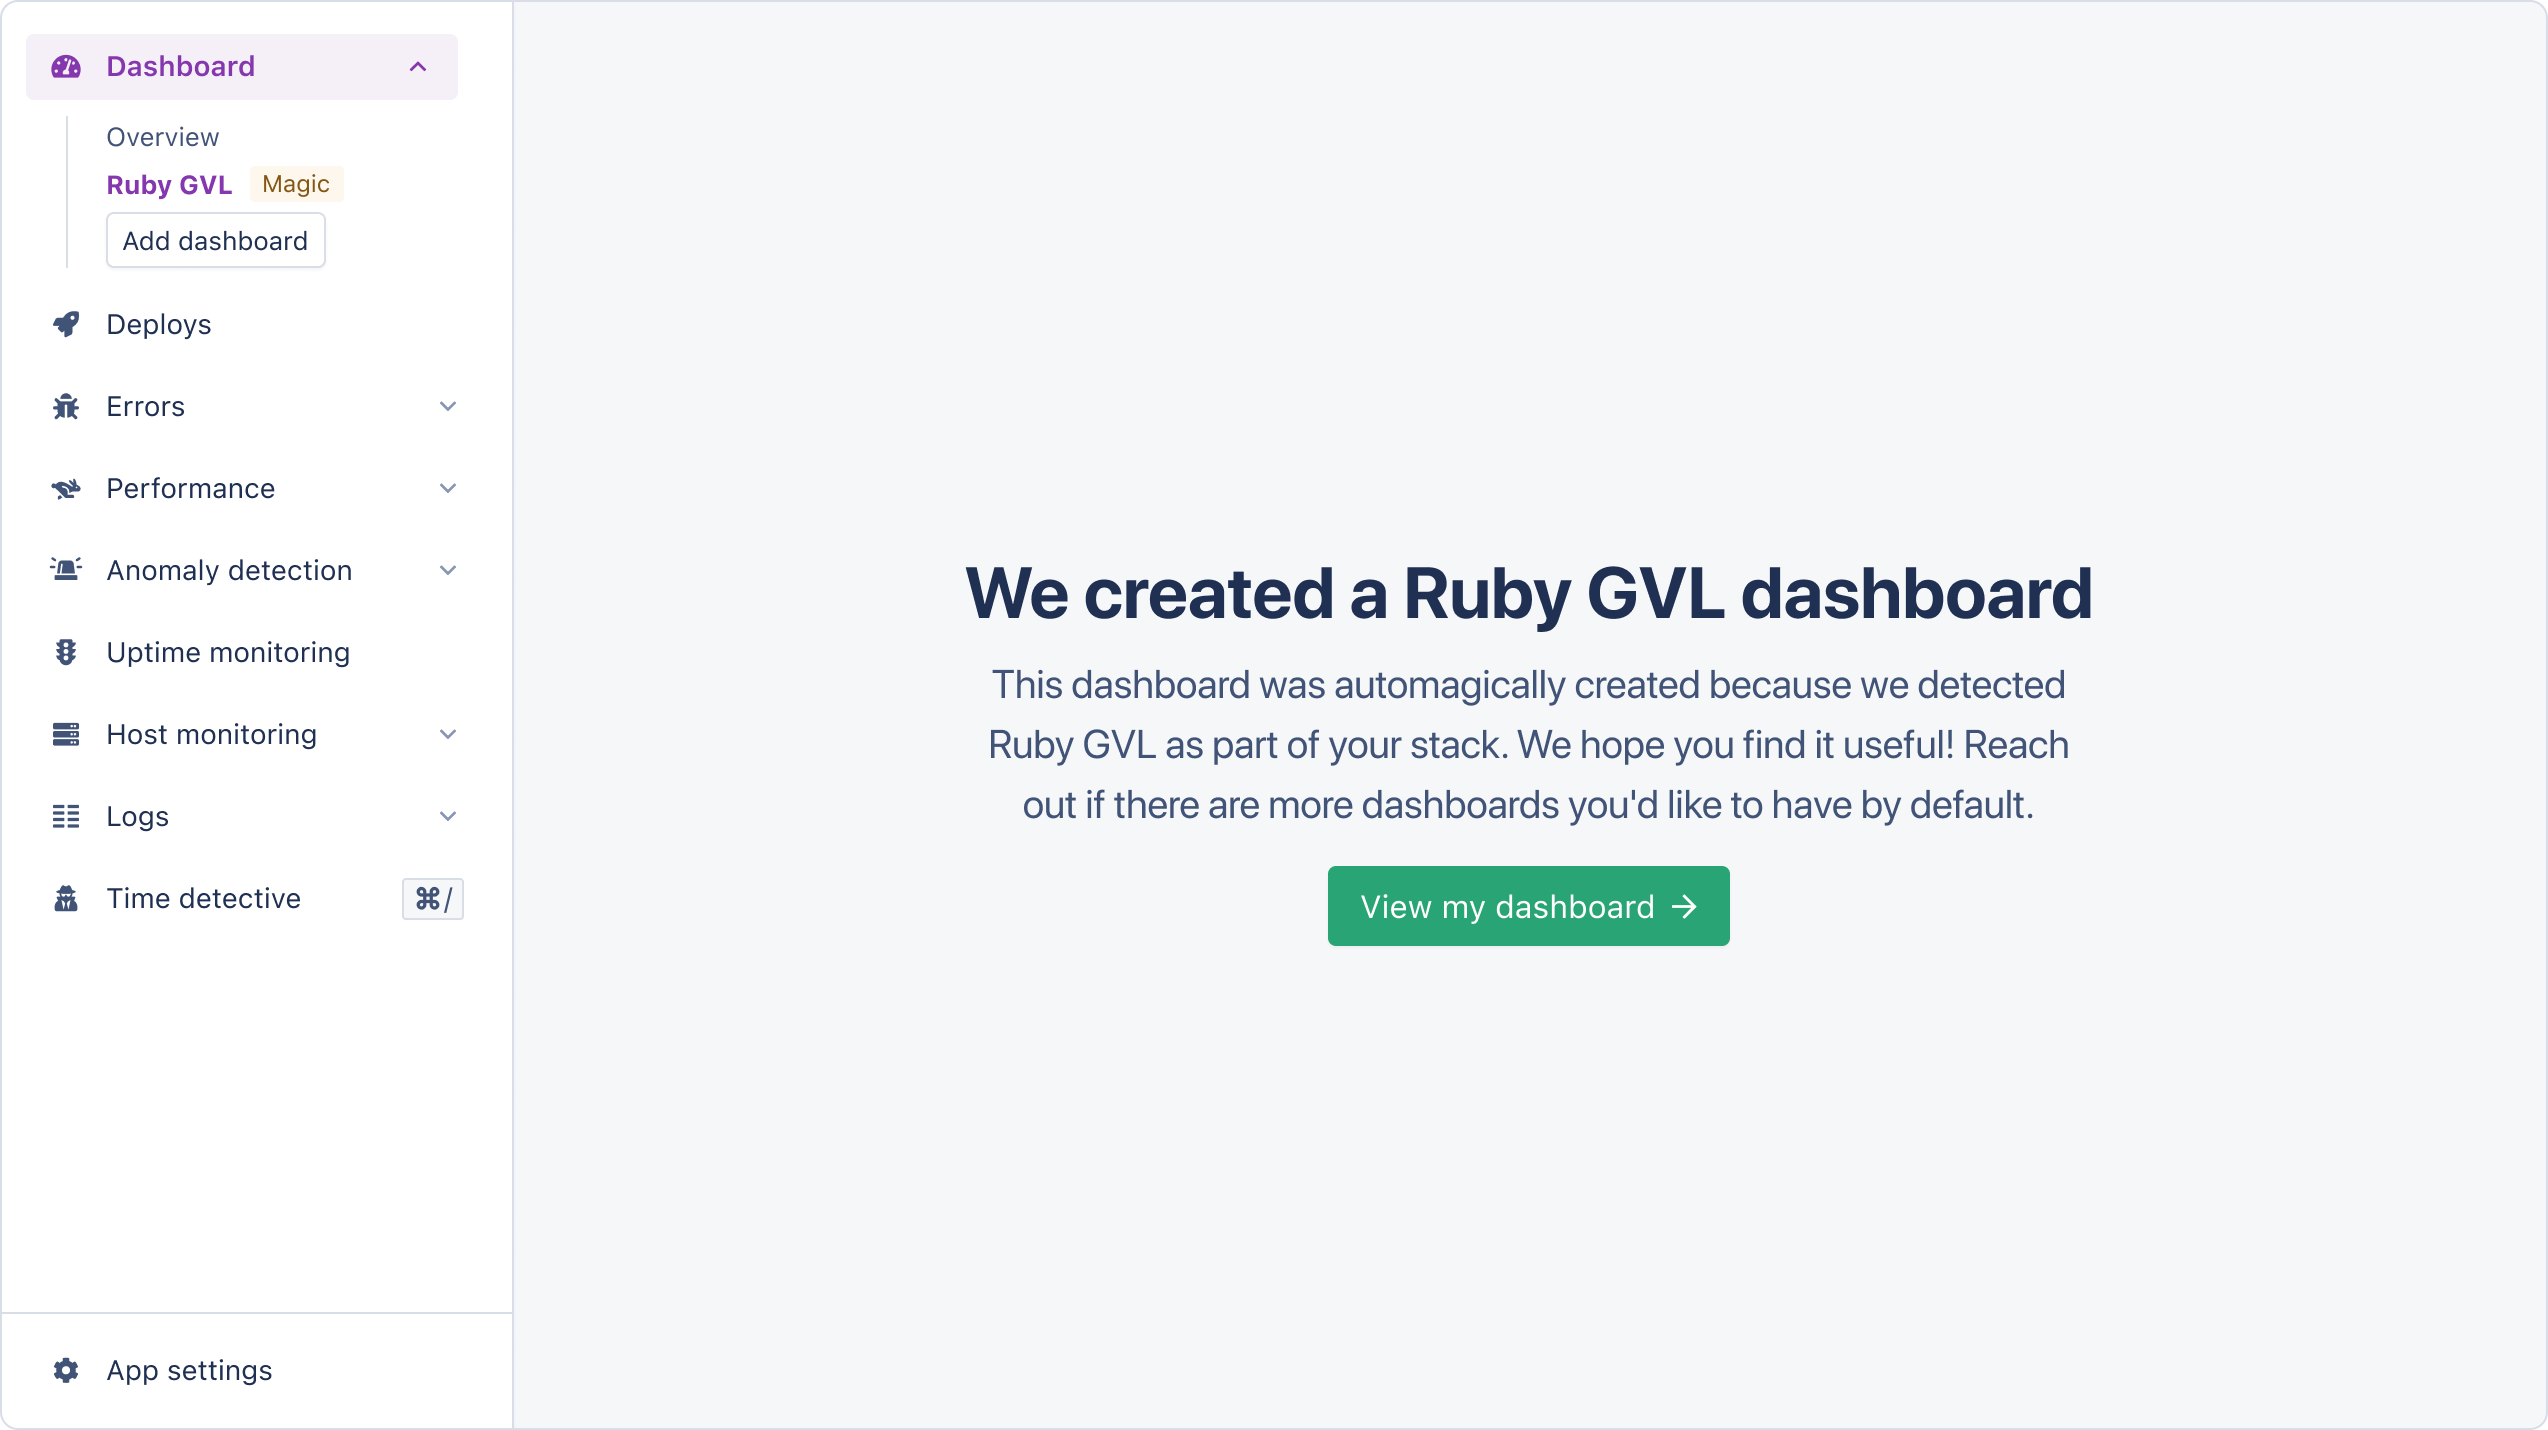 Ruby GVL Magic Dashoard creation